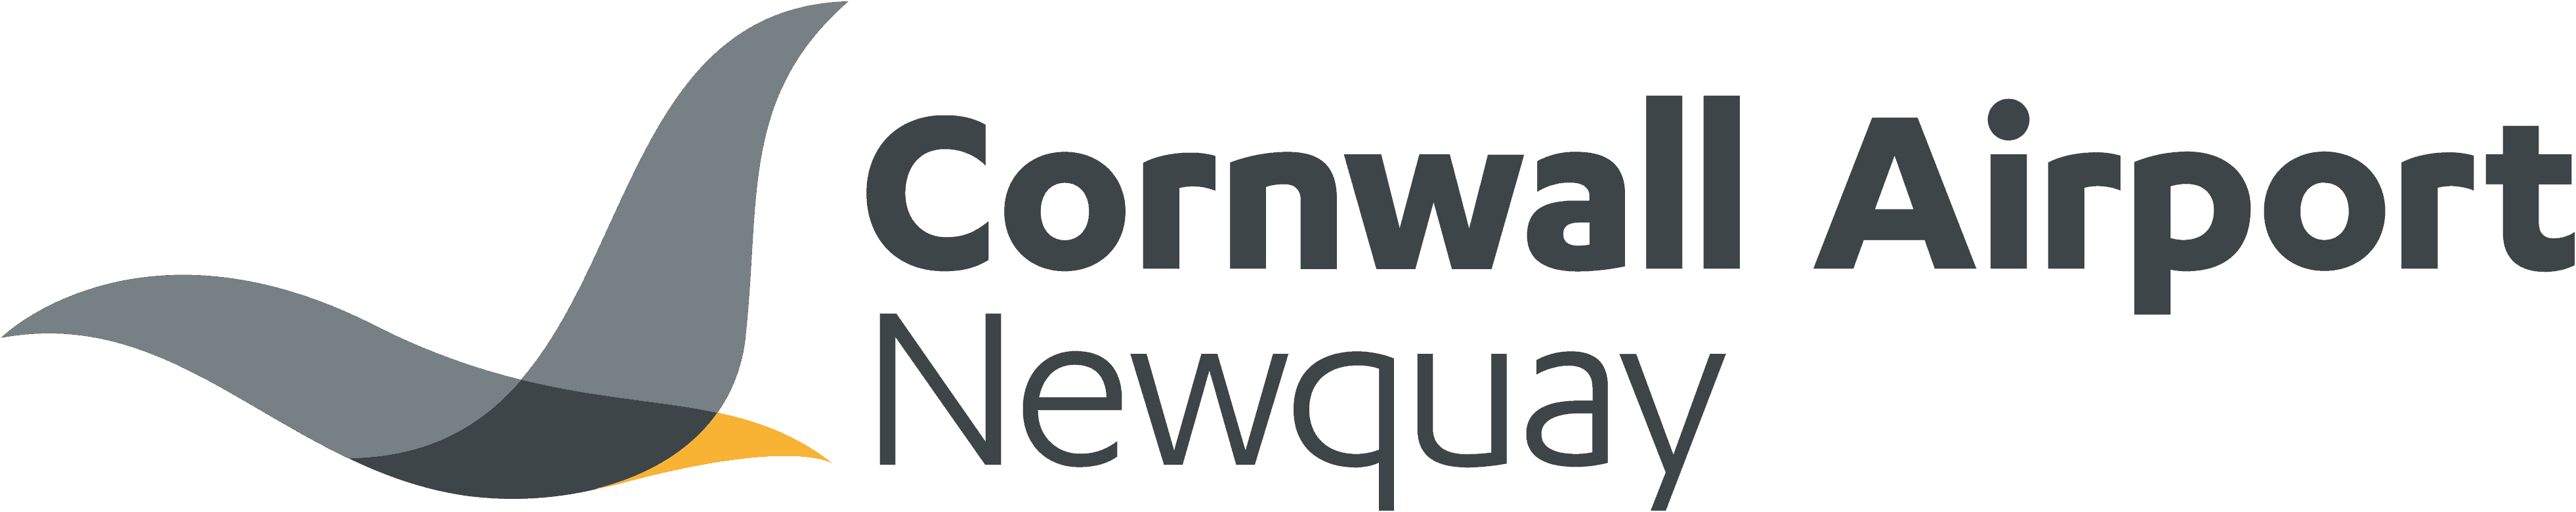 newquay airport logo